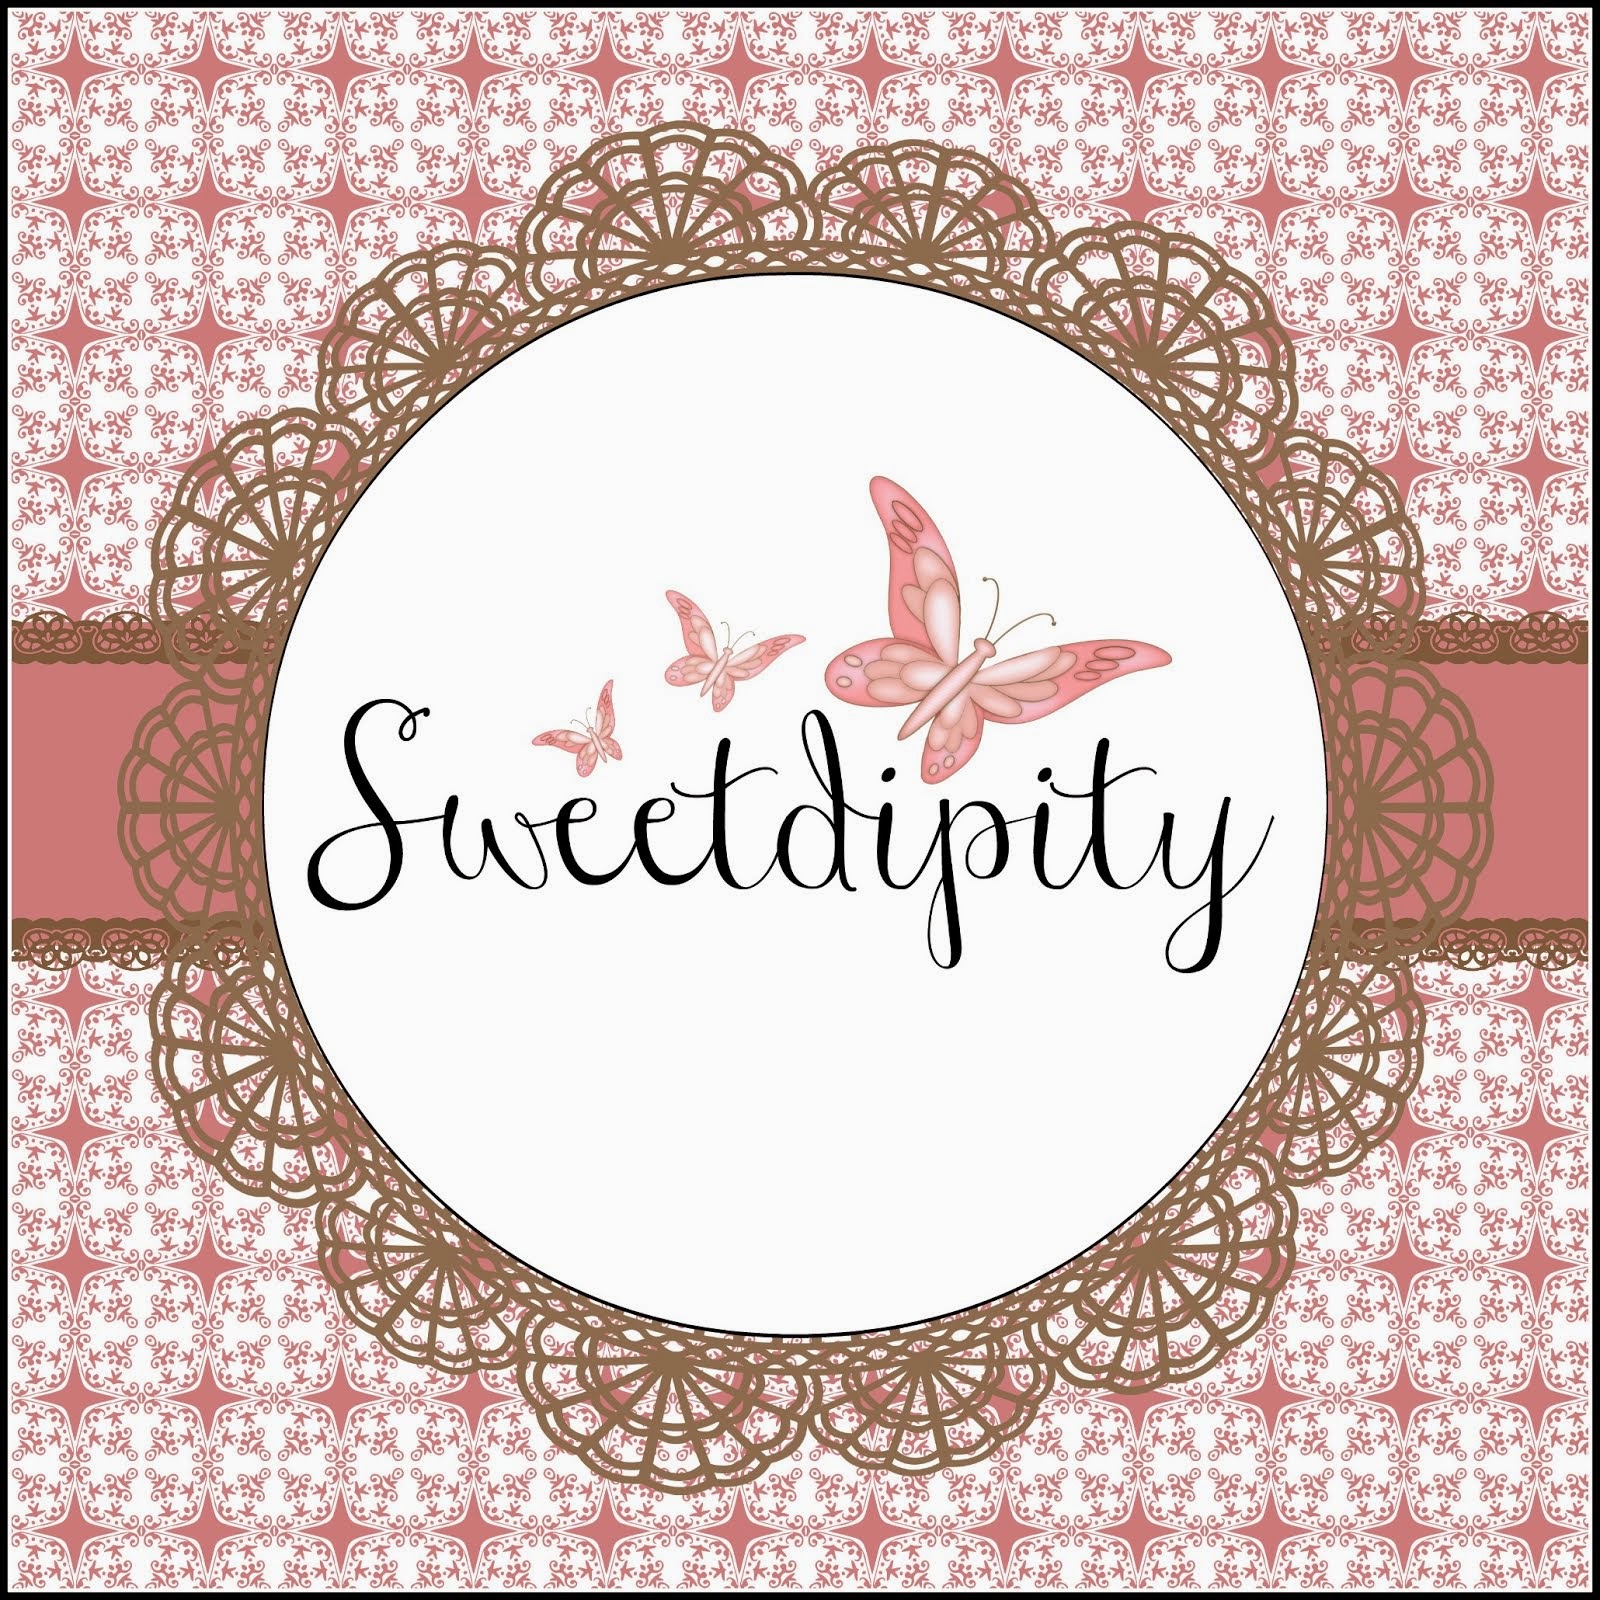 Sweetdipity